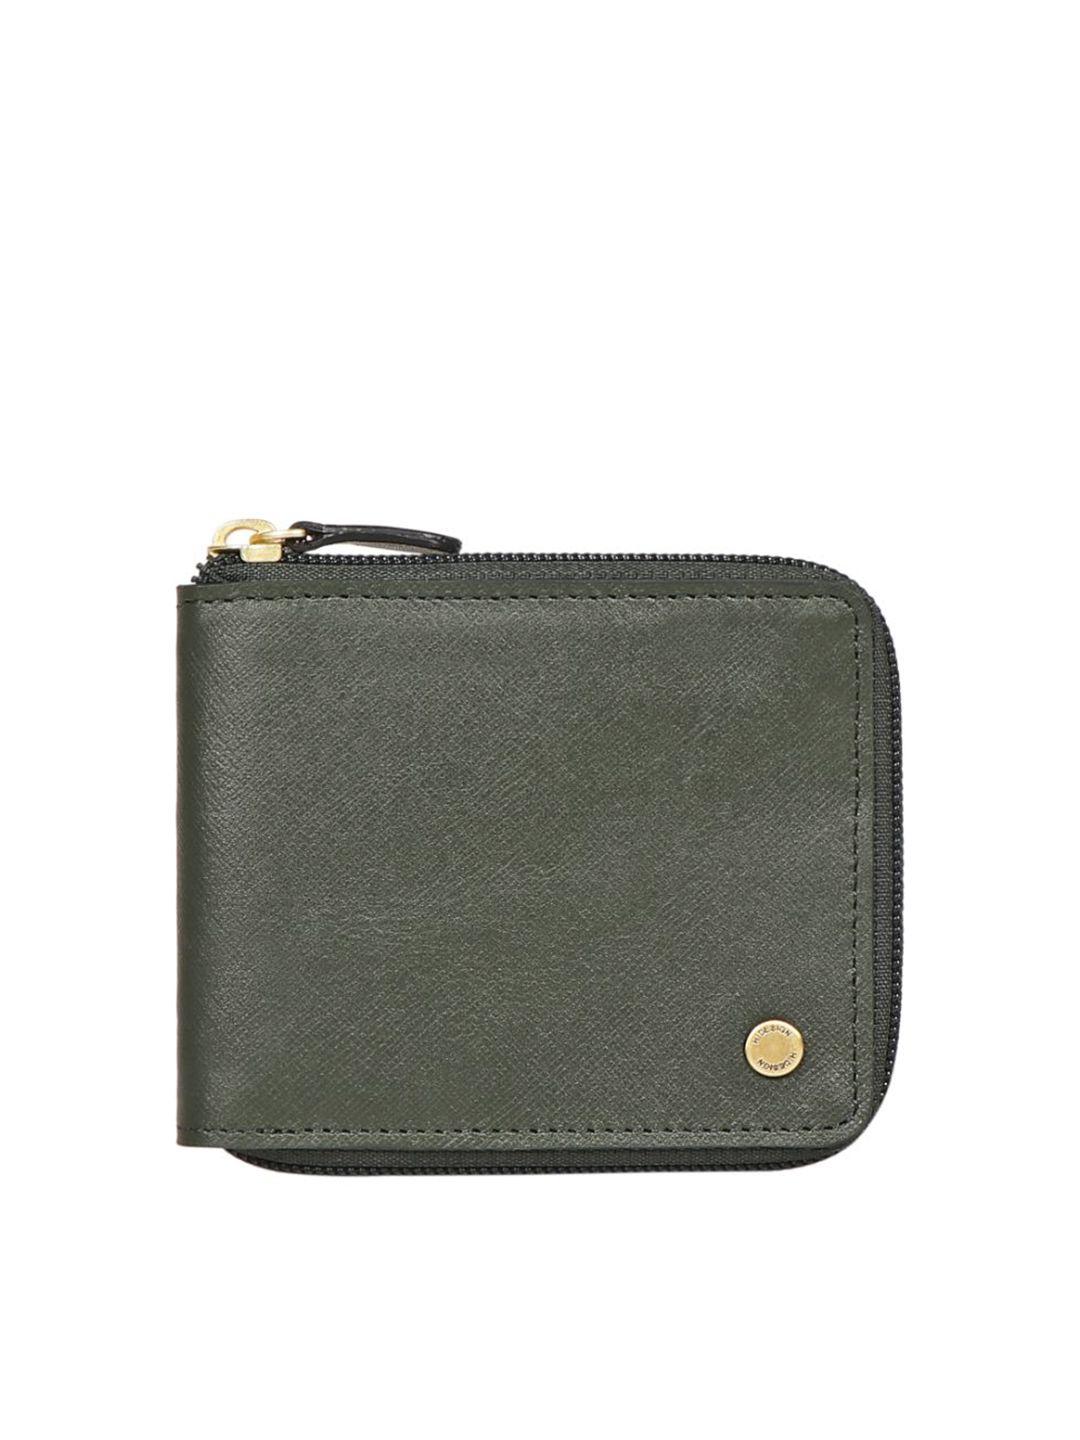 hidesign men leather zip around wallet with sd card holder